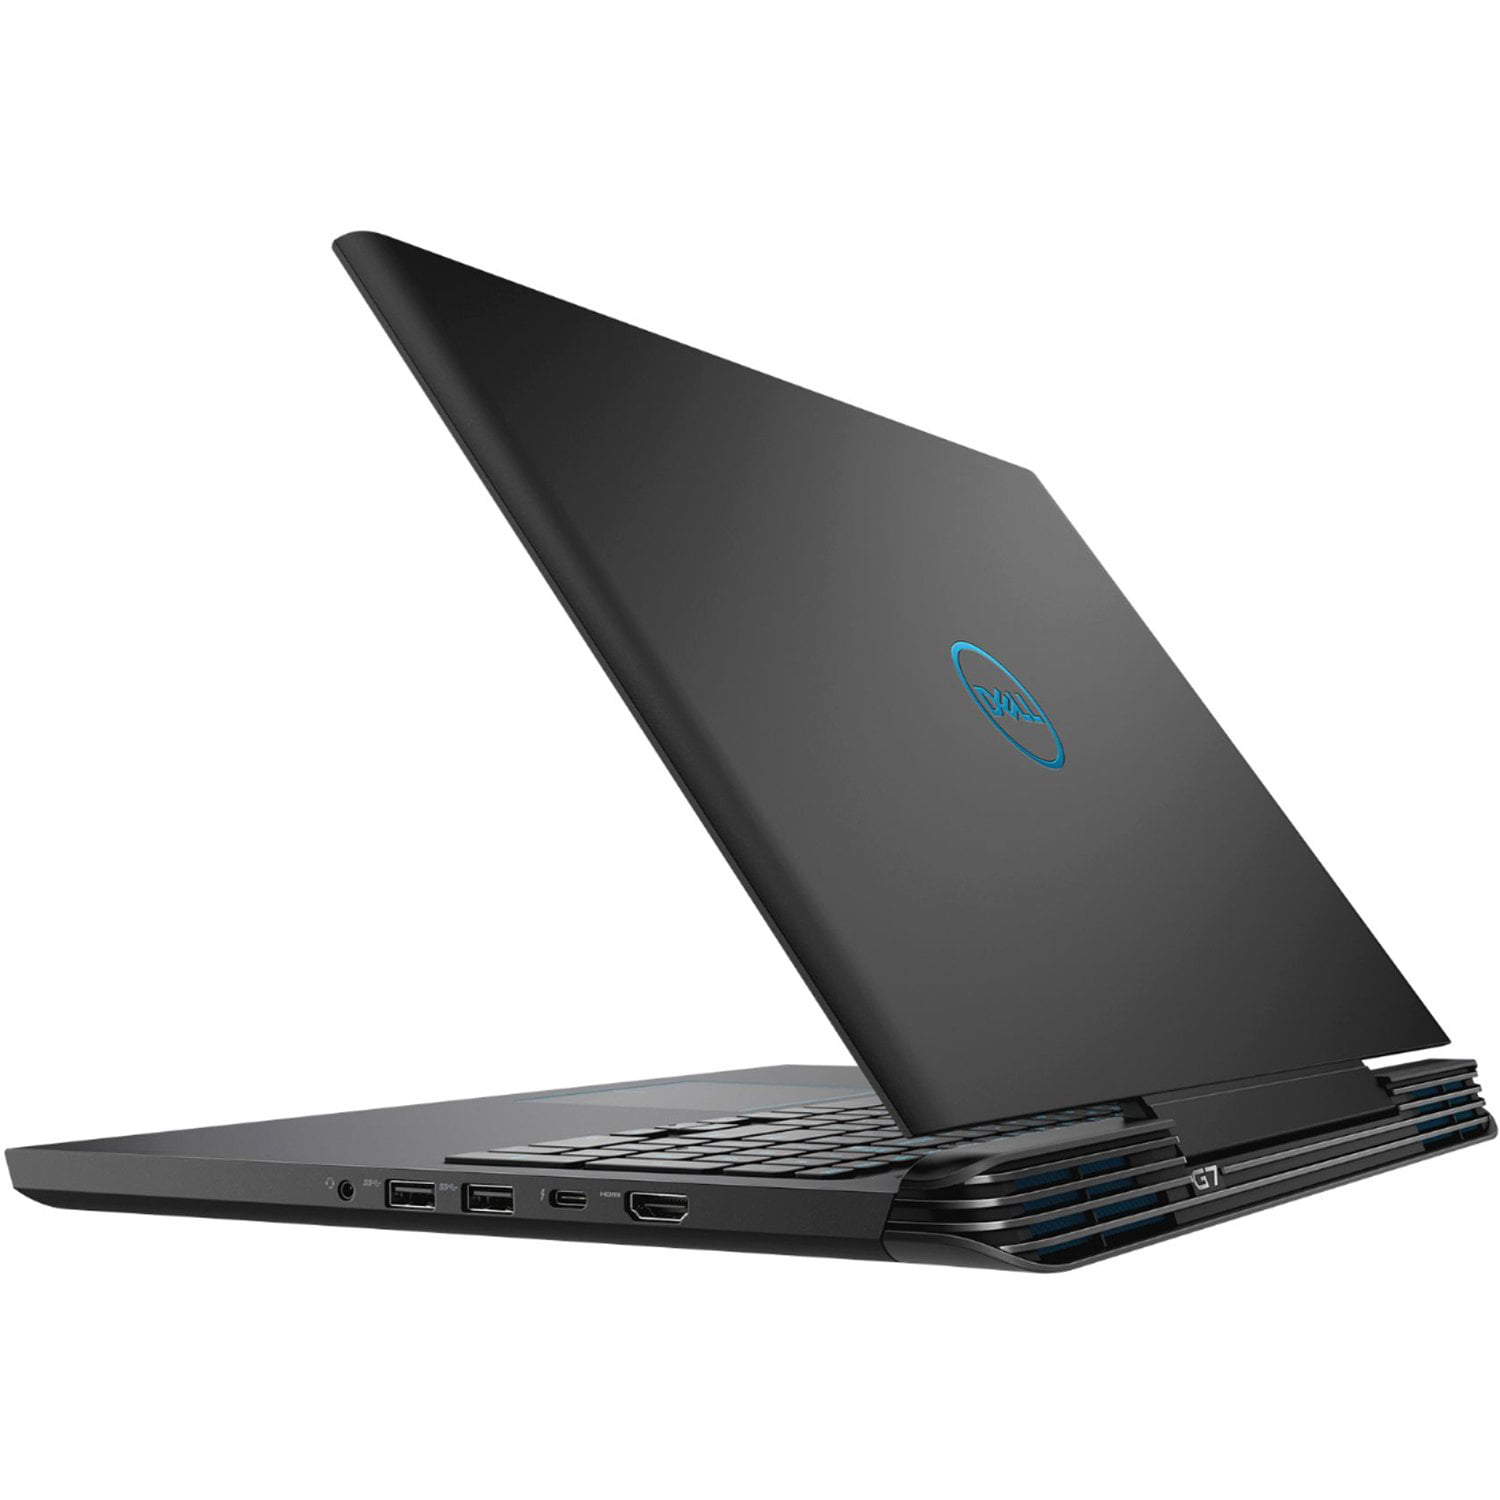 Dell G7 15 7588 Gaming Laptop (Intel Core i7-8750H, 8GB RAM, 256GB 